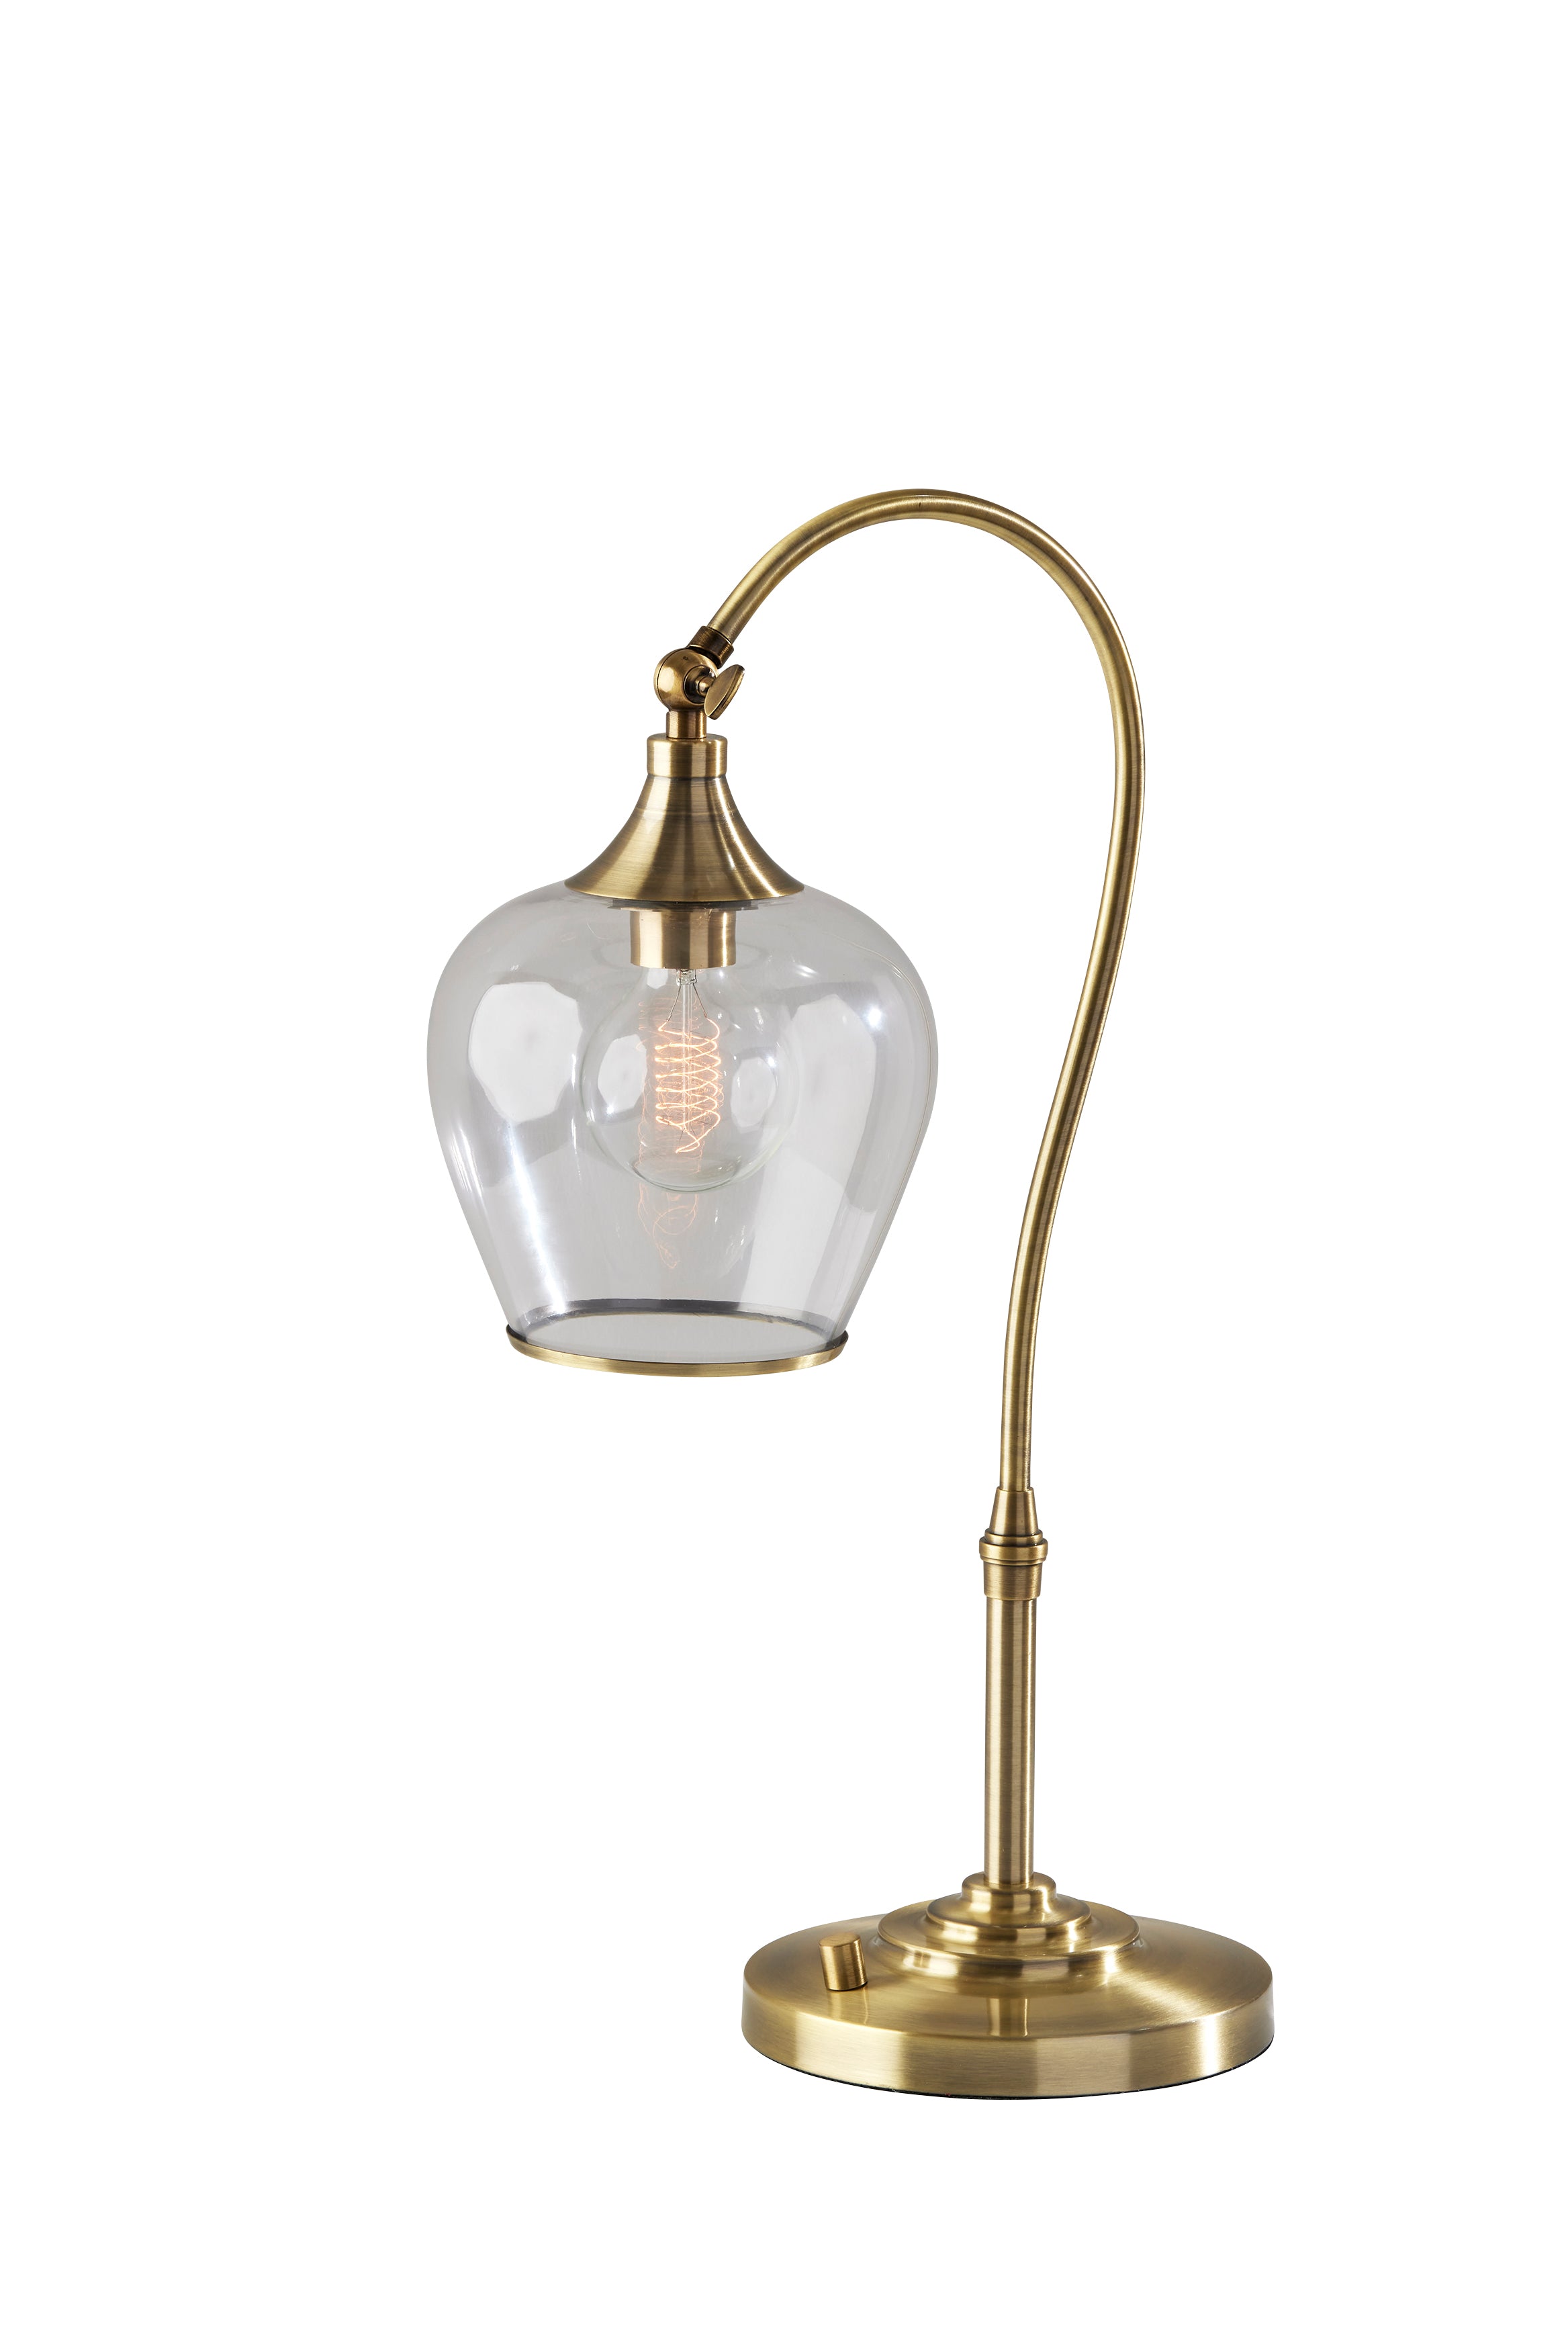 BRADFORD Lampe sur table Or - 3922-21 | ADESSO